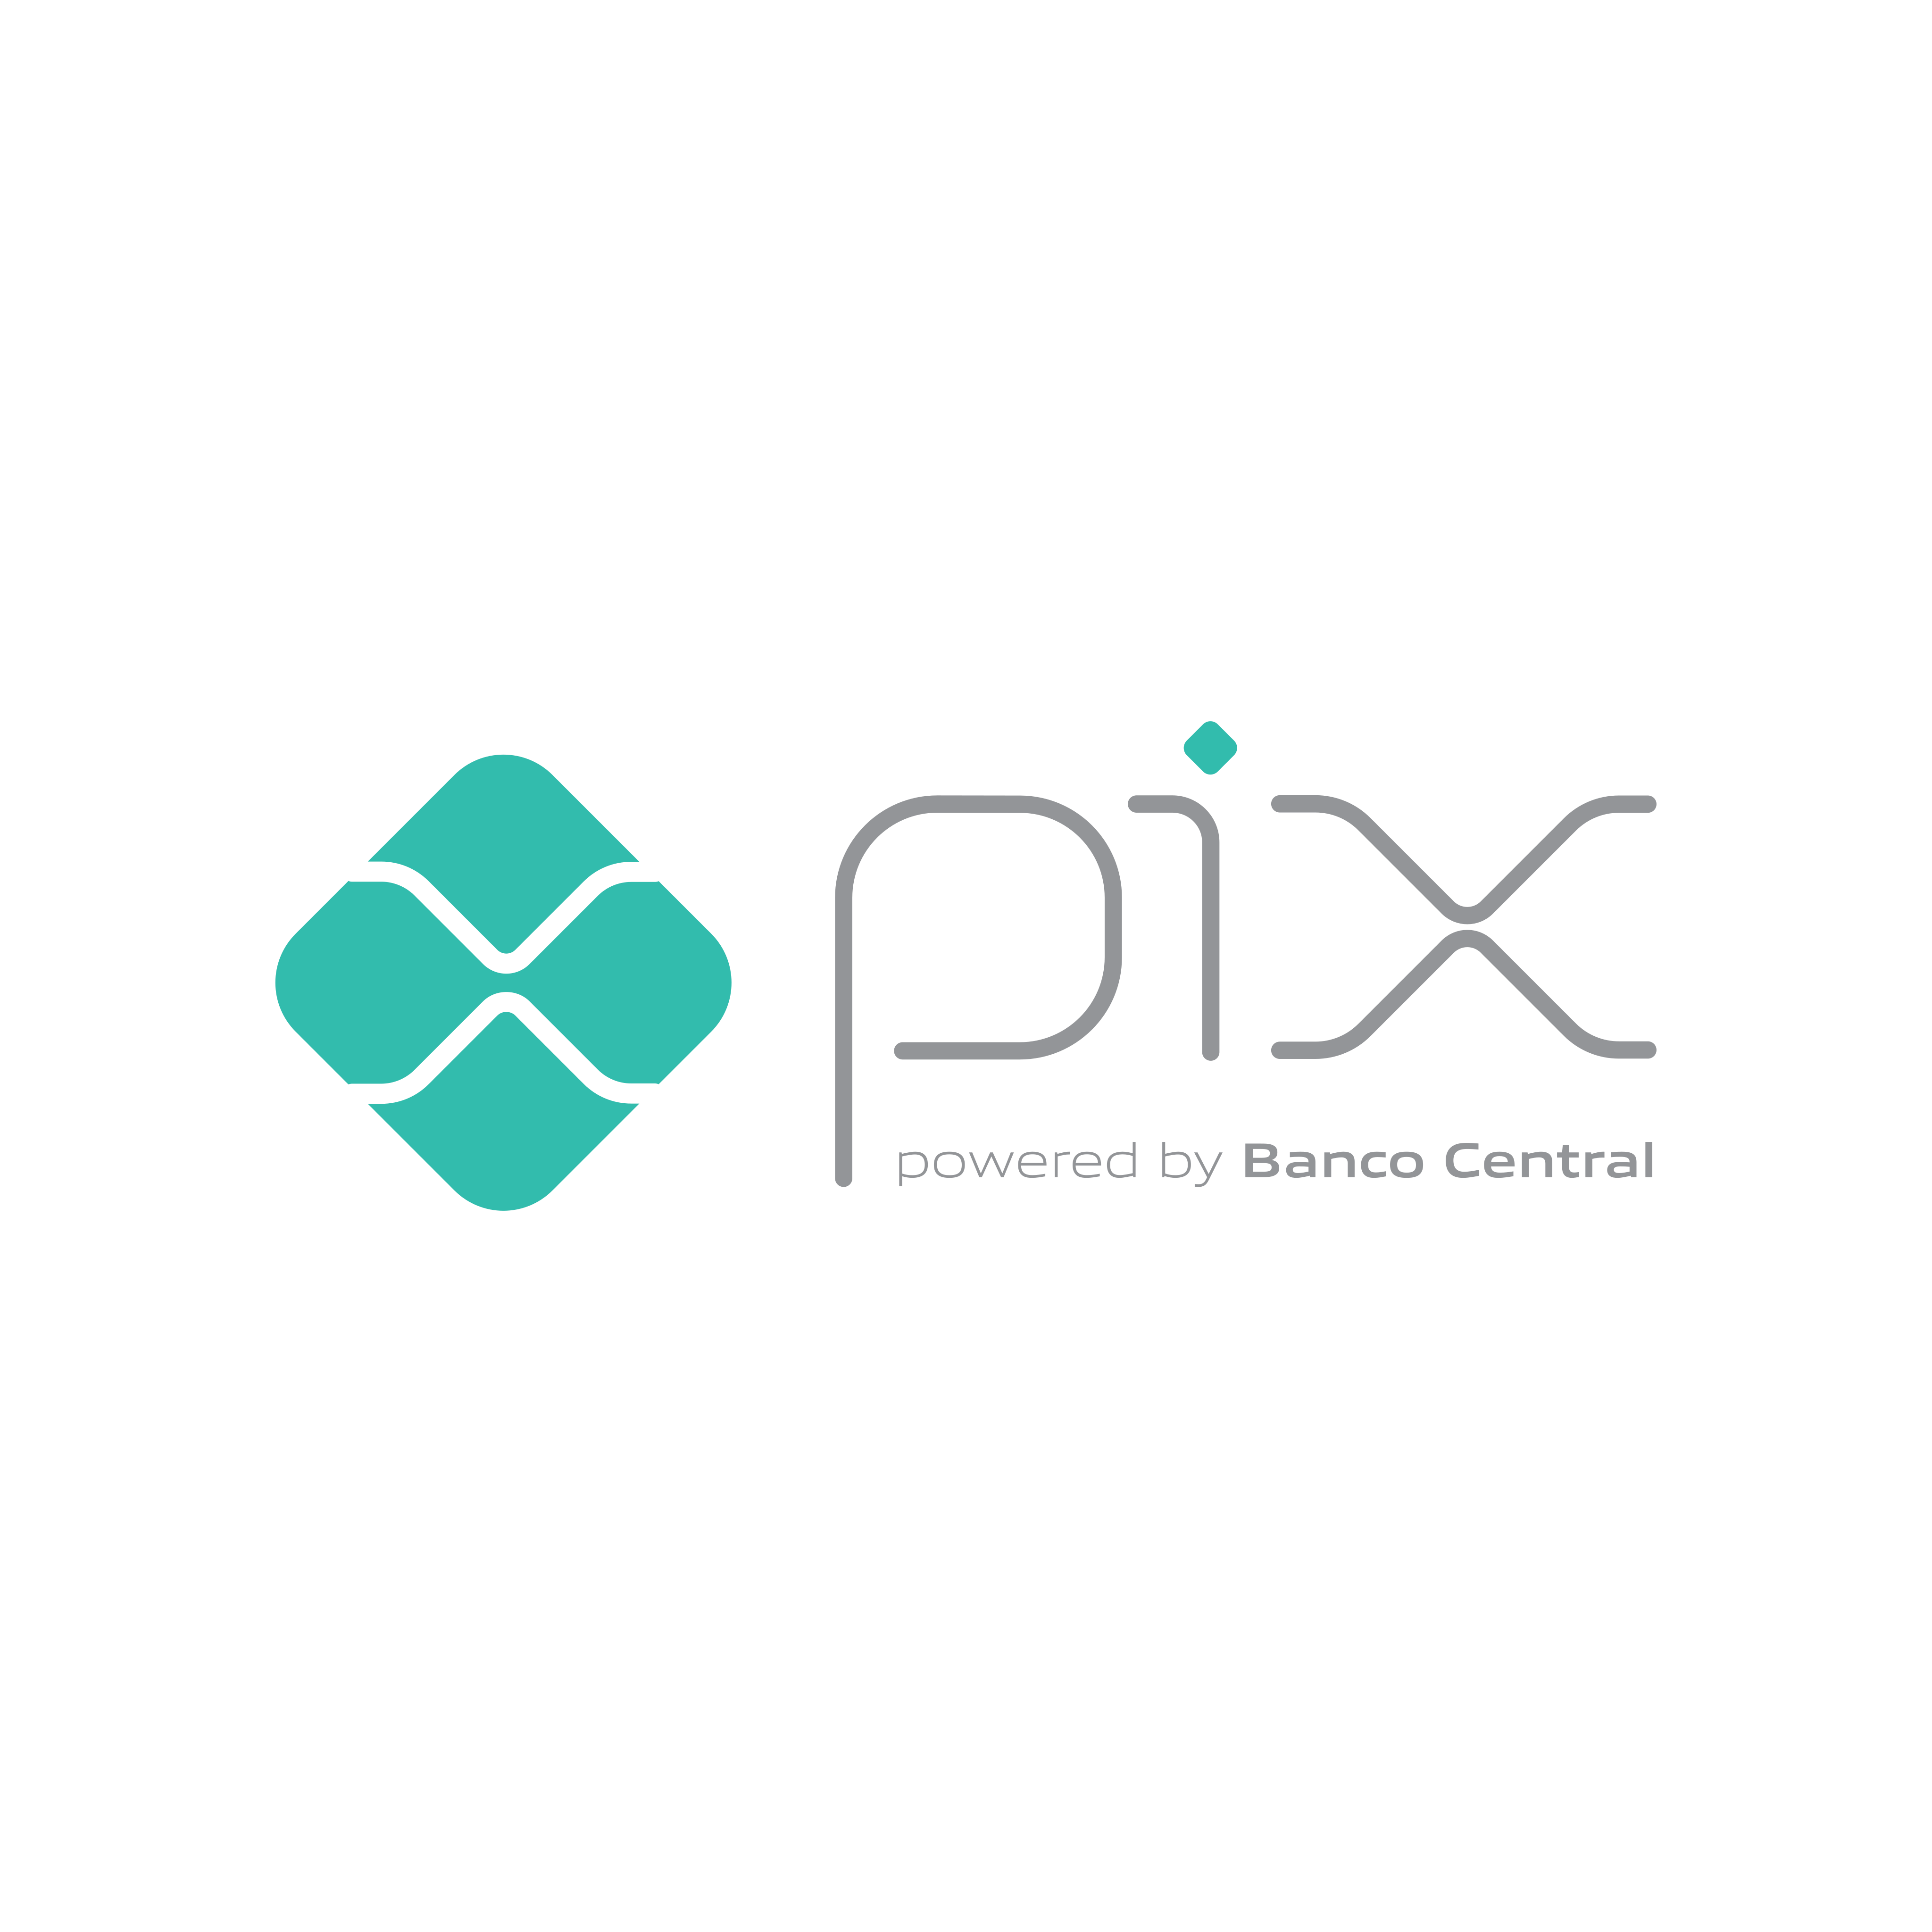 PIX Banco Central Logo PNG.